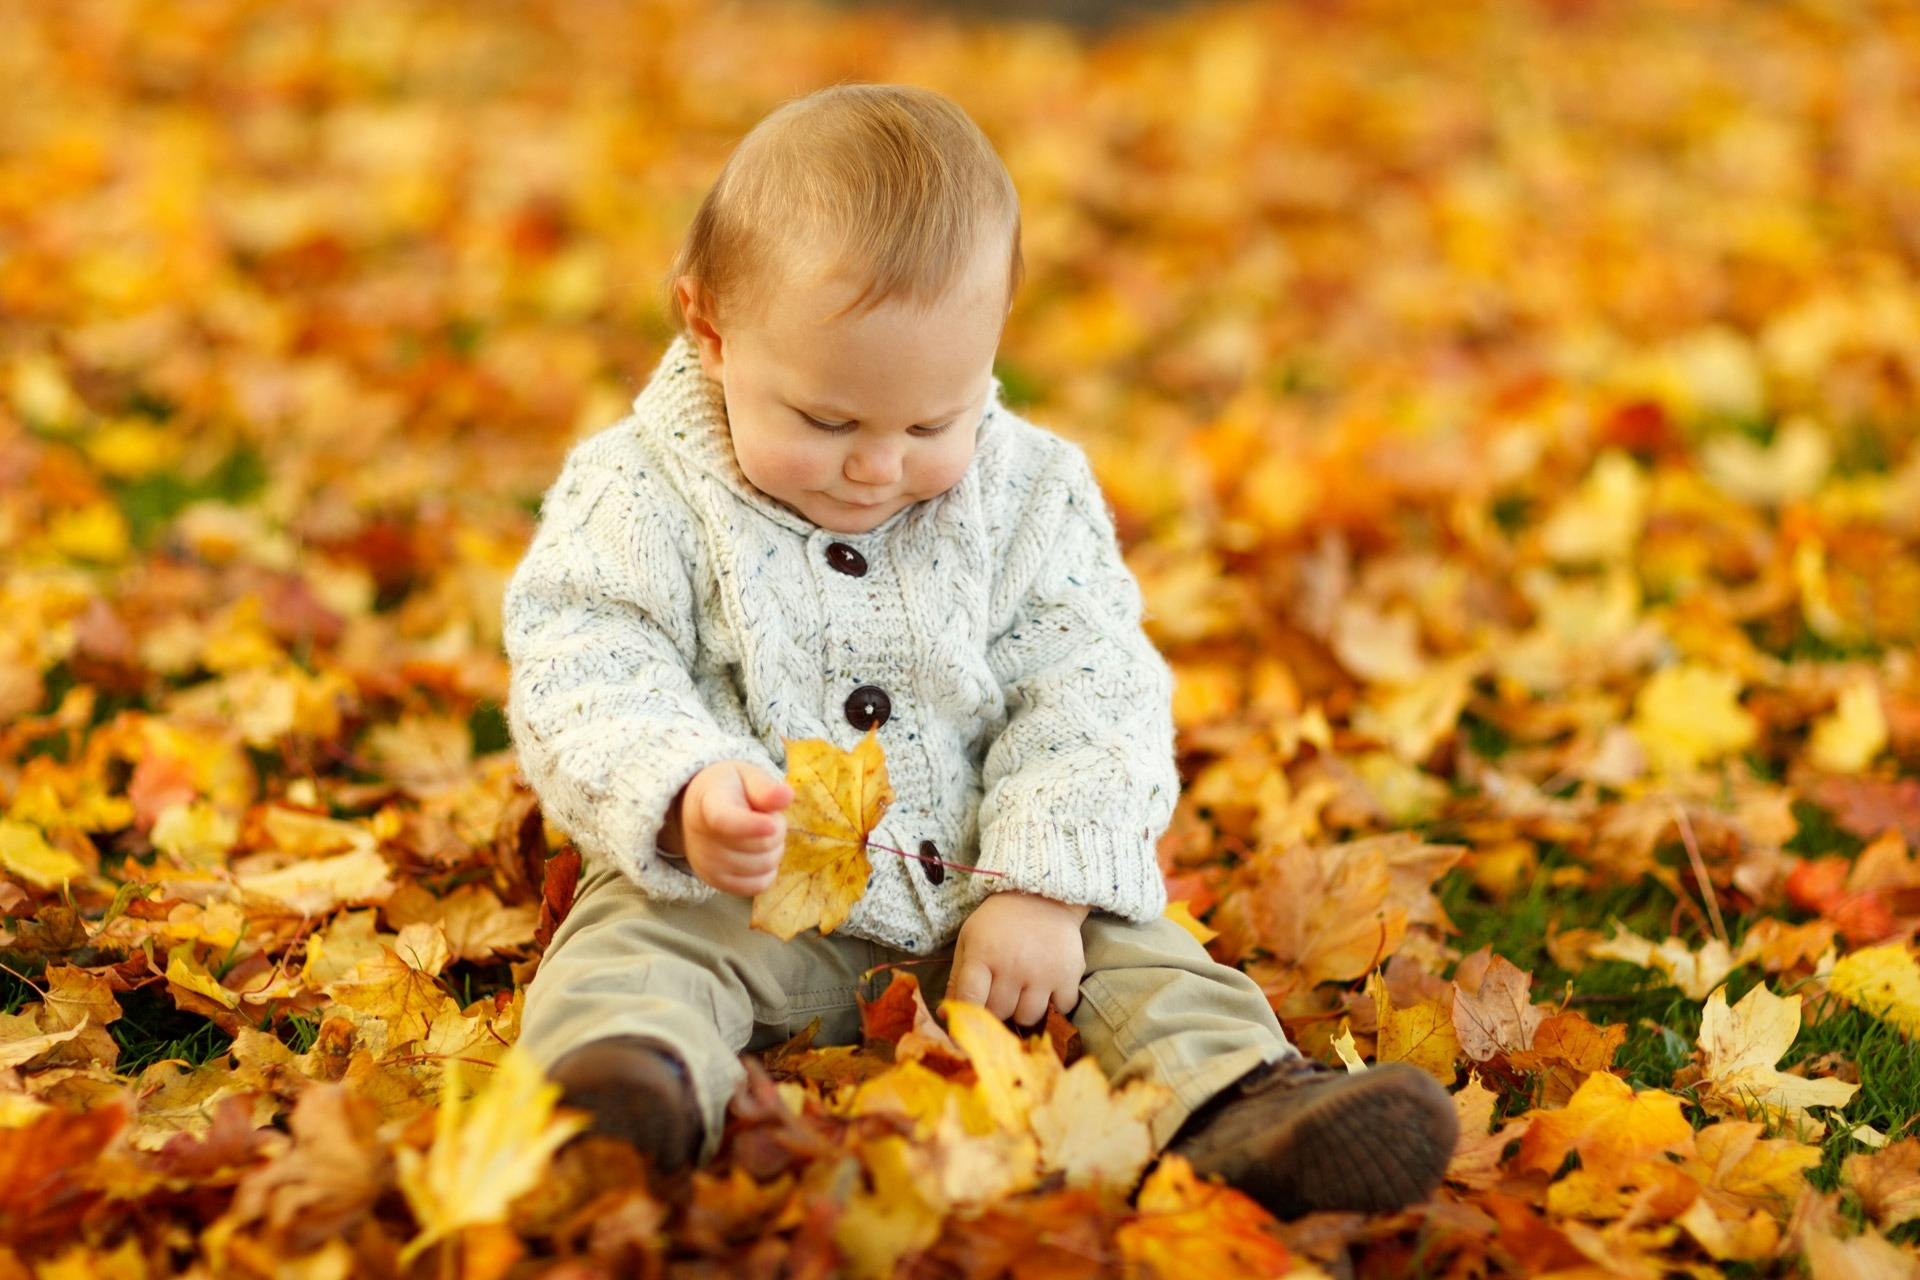 Display Autumn Fall Baby Boy Child · Free Stock Photo